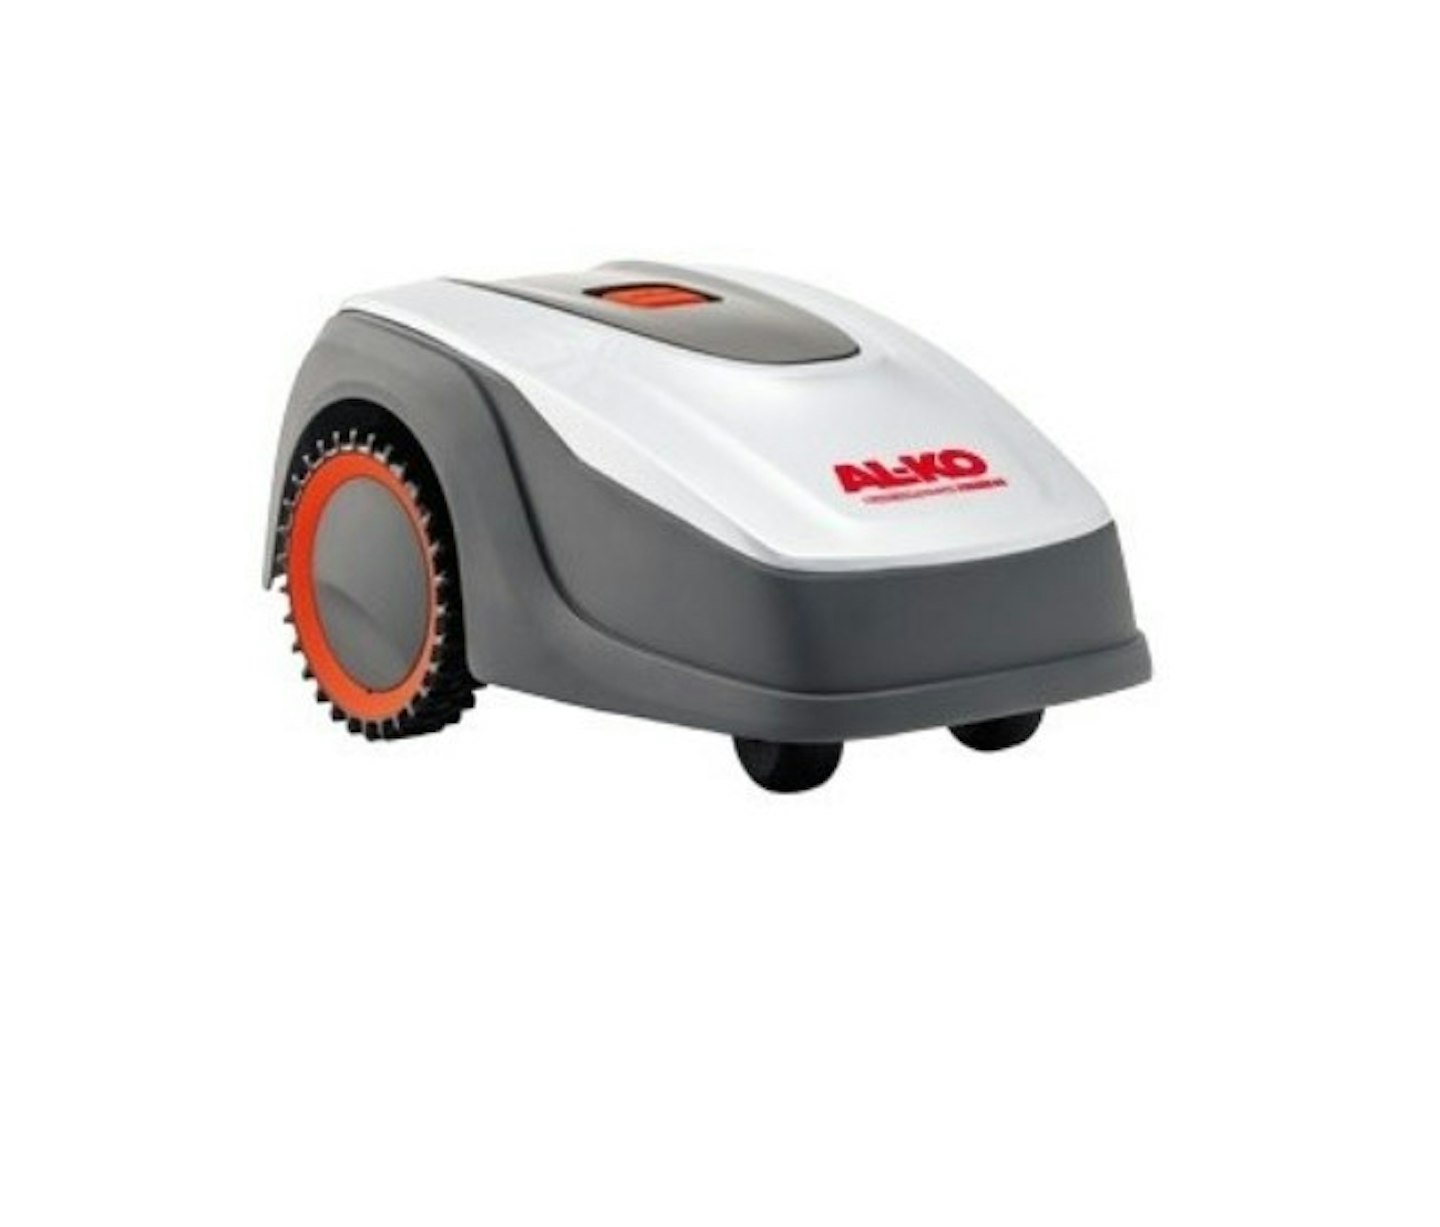 https://www.oakgardenmachinery.co.uk/grass-lawn-care-machinery-sales/al-ko-robolinhor-500-e-robotic-lawn-mower